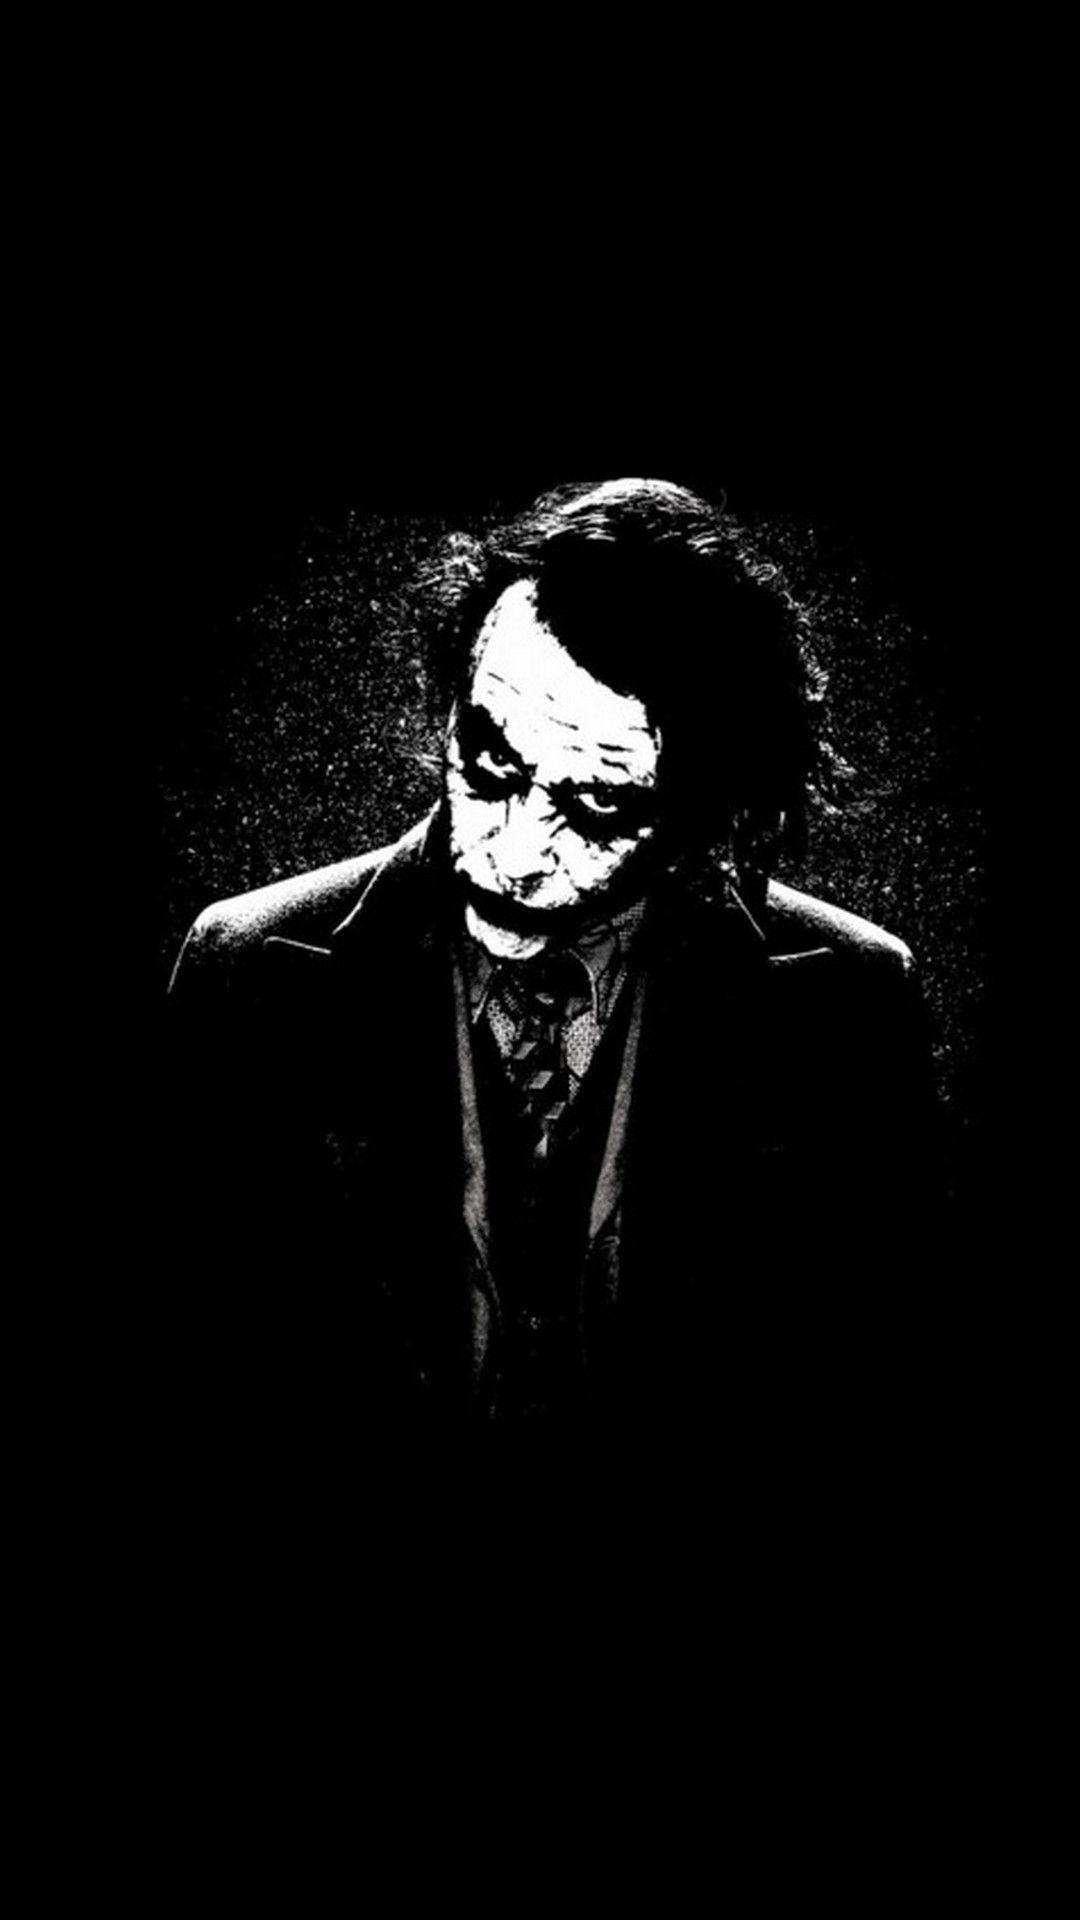 Black Joker iPhone Wallpaper. Joker wallpaper, Joker iphone